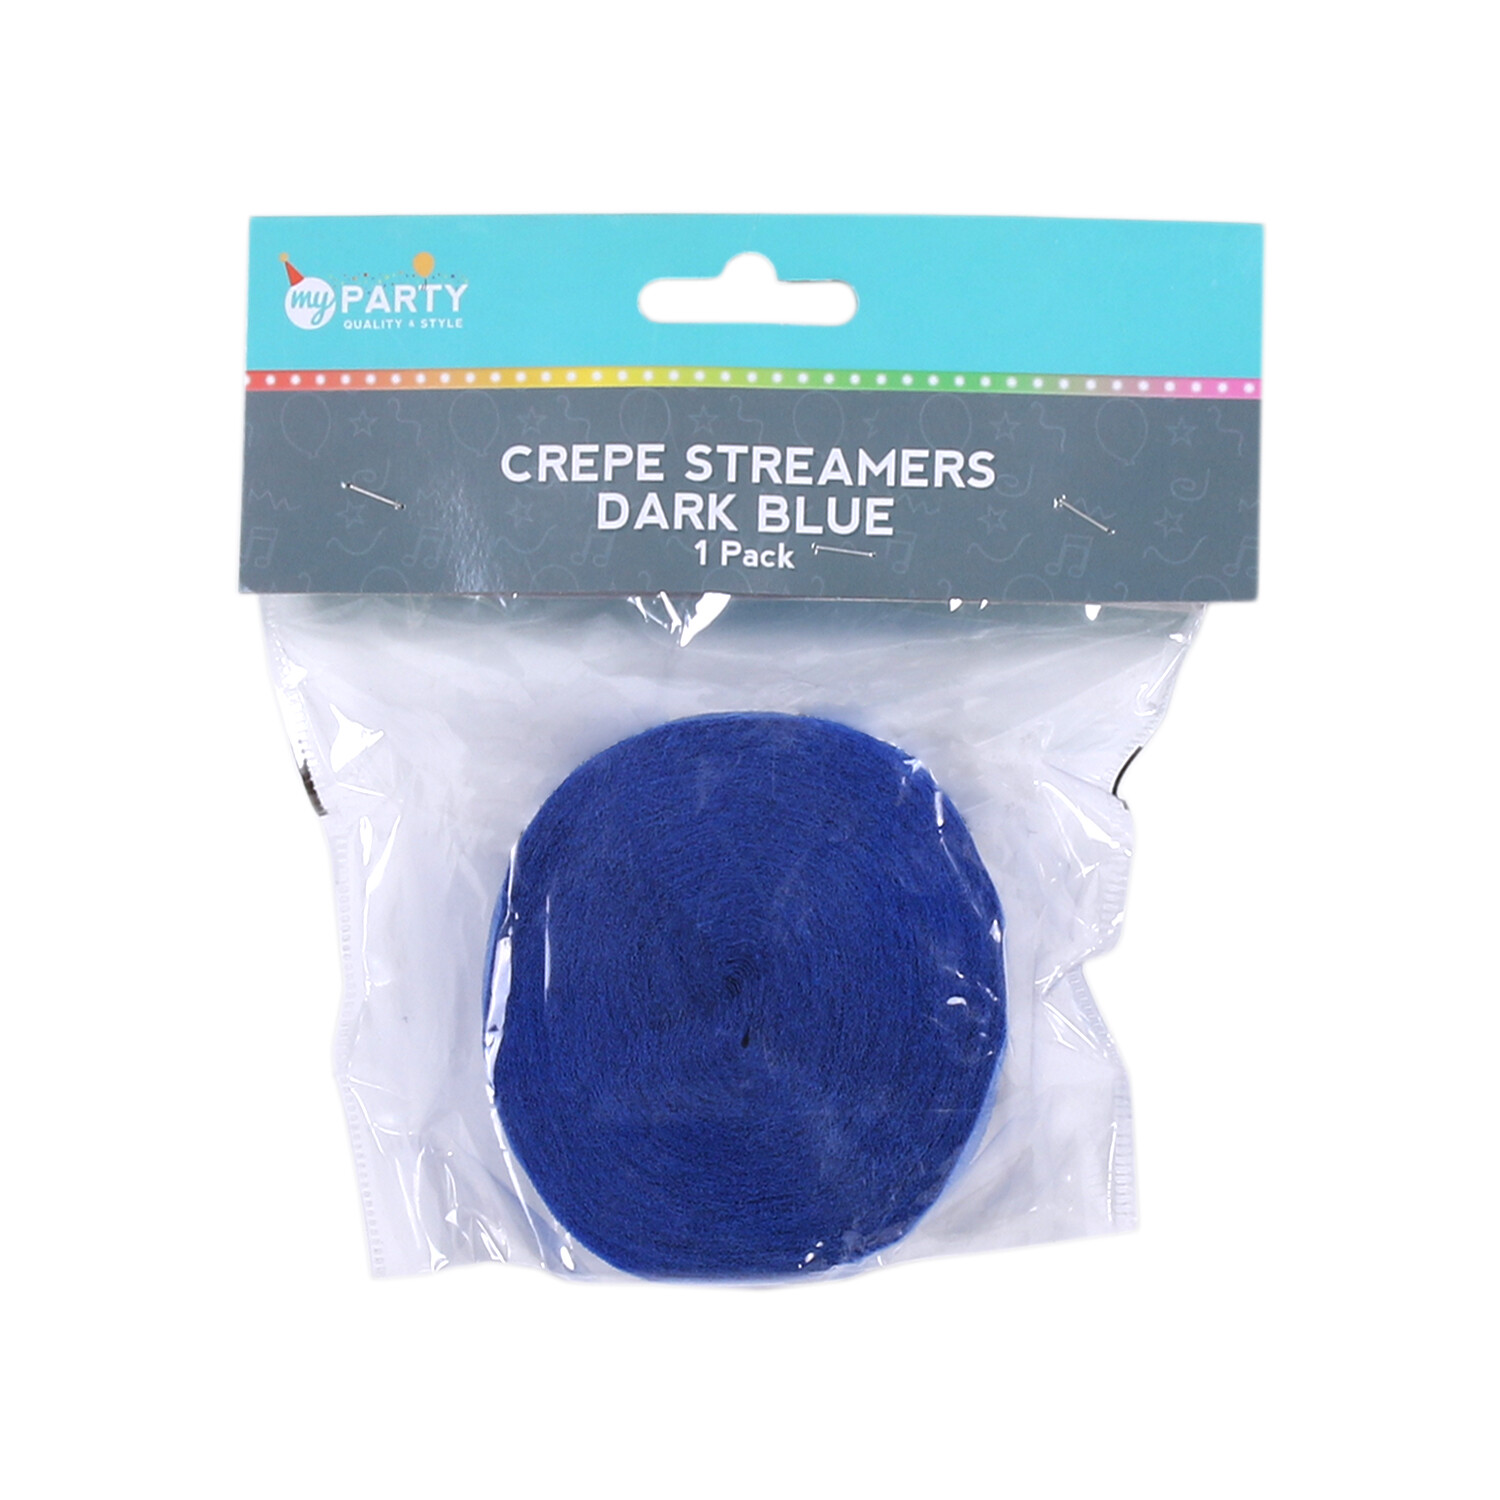 Crepe Streamer Roll - Dark Blue Image